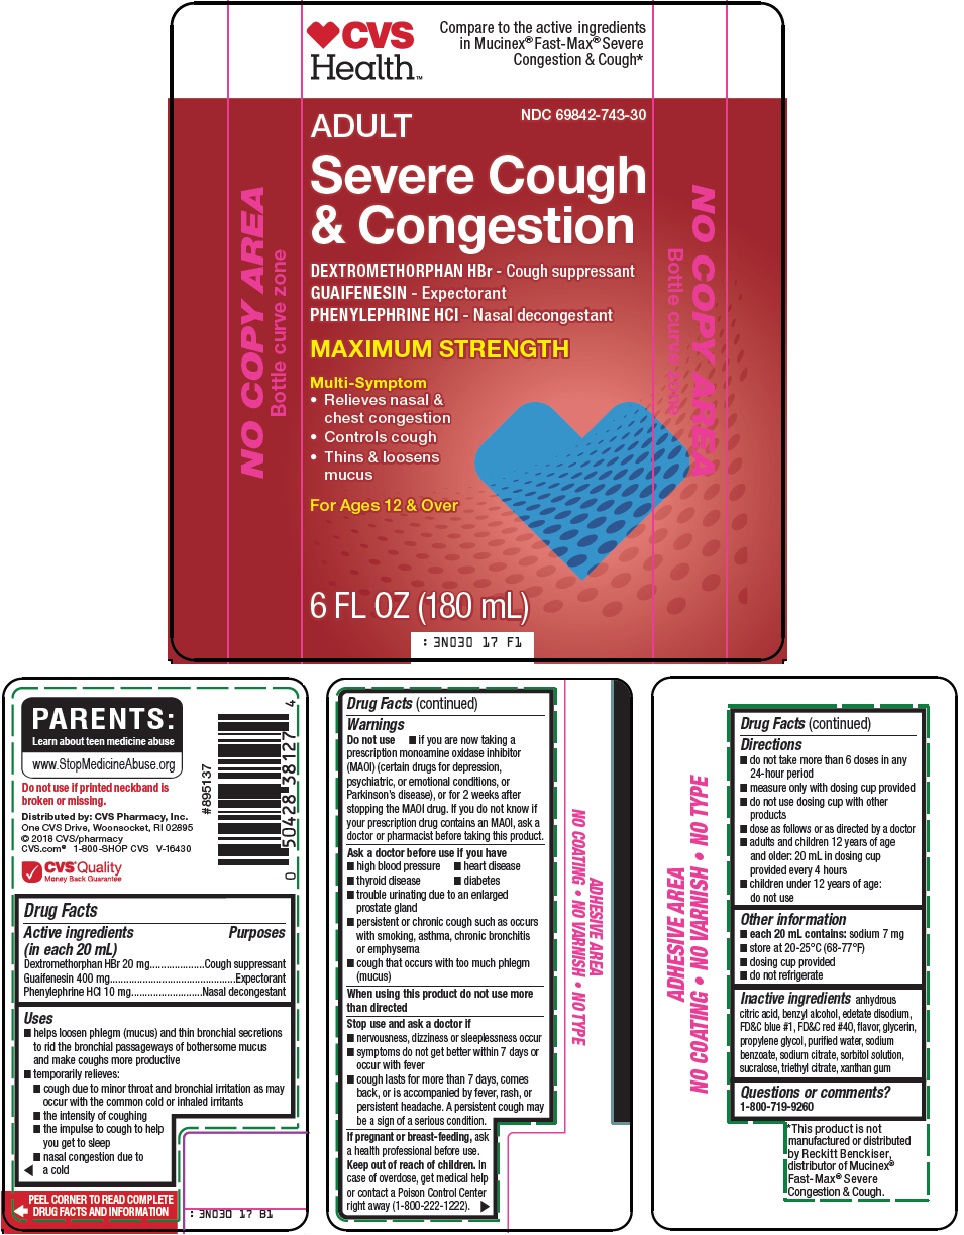 severe cough & congestion image